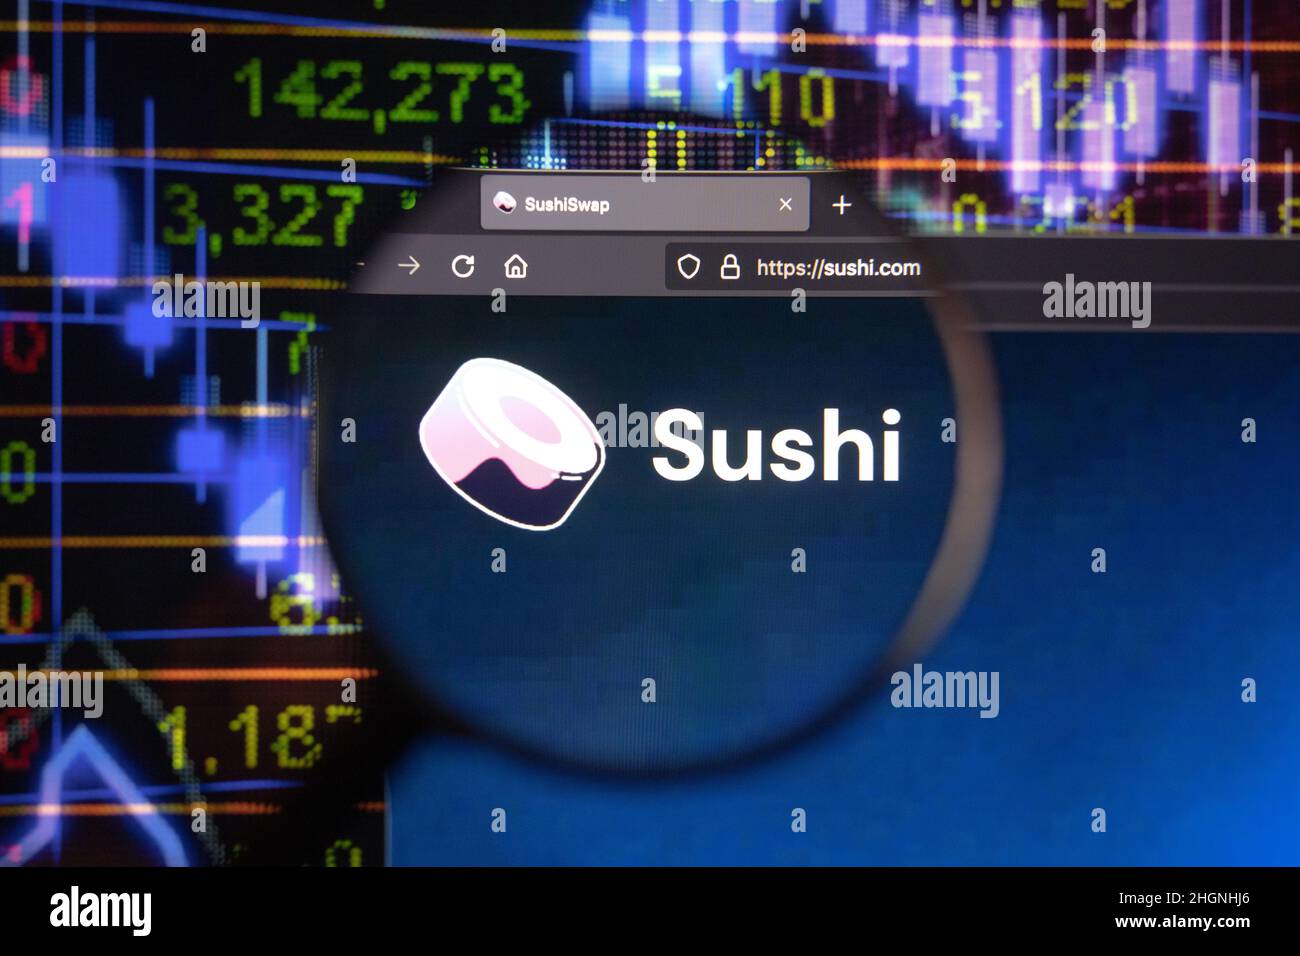 Sushi crypto company logo on a website, seen on a computer screen through a magnifying glass. Stock Photo